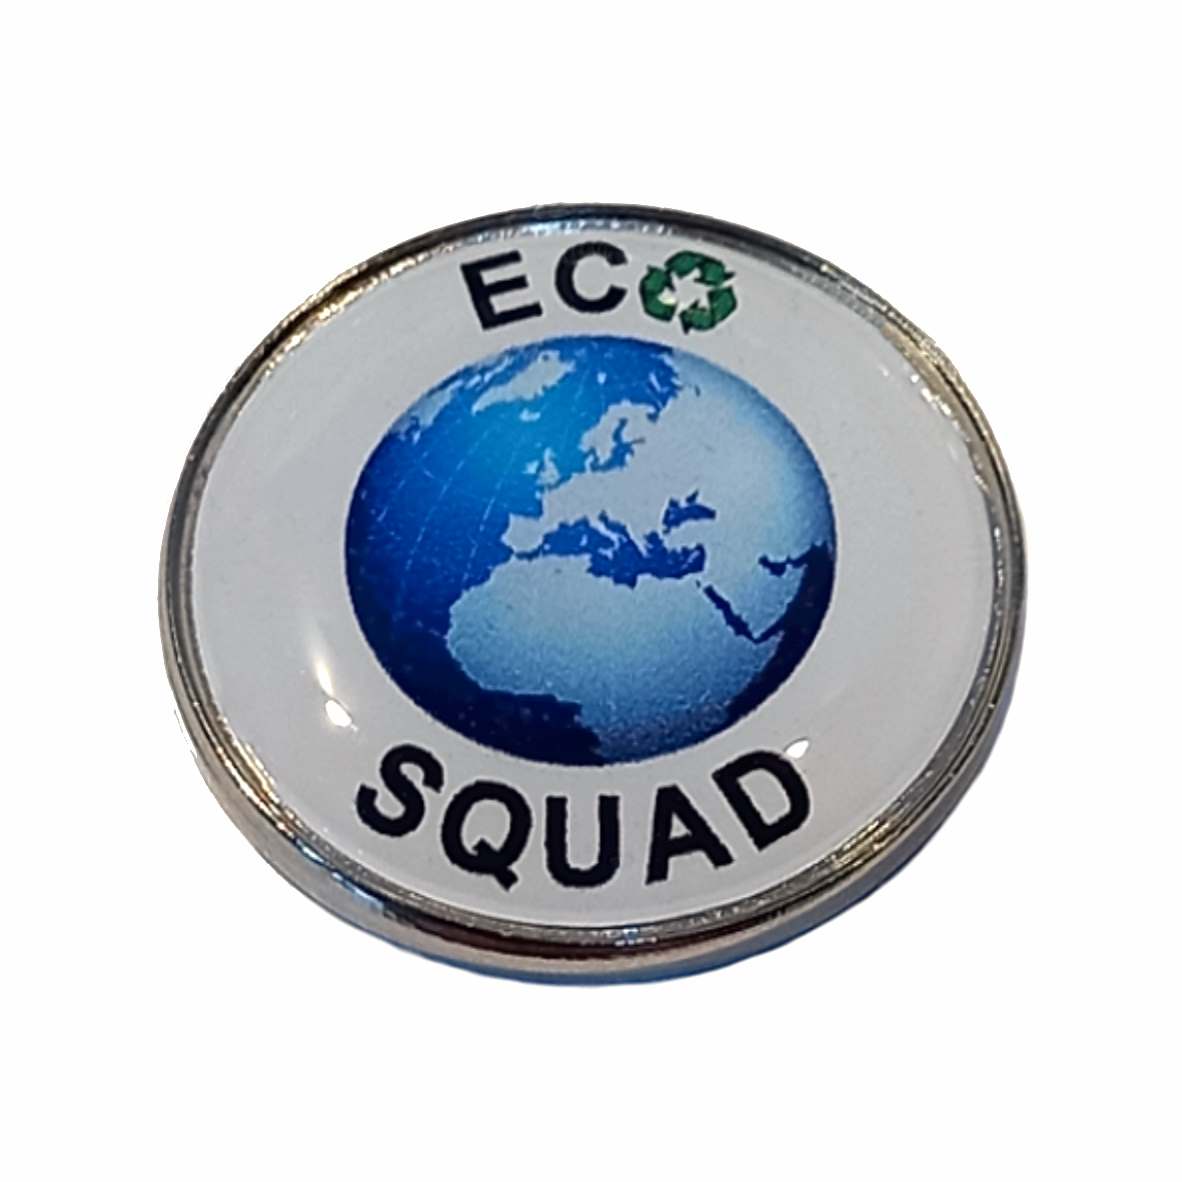 ECO SQUAD round badge